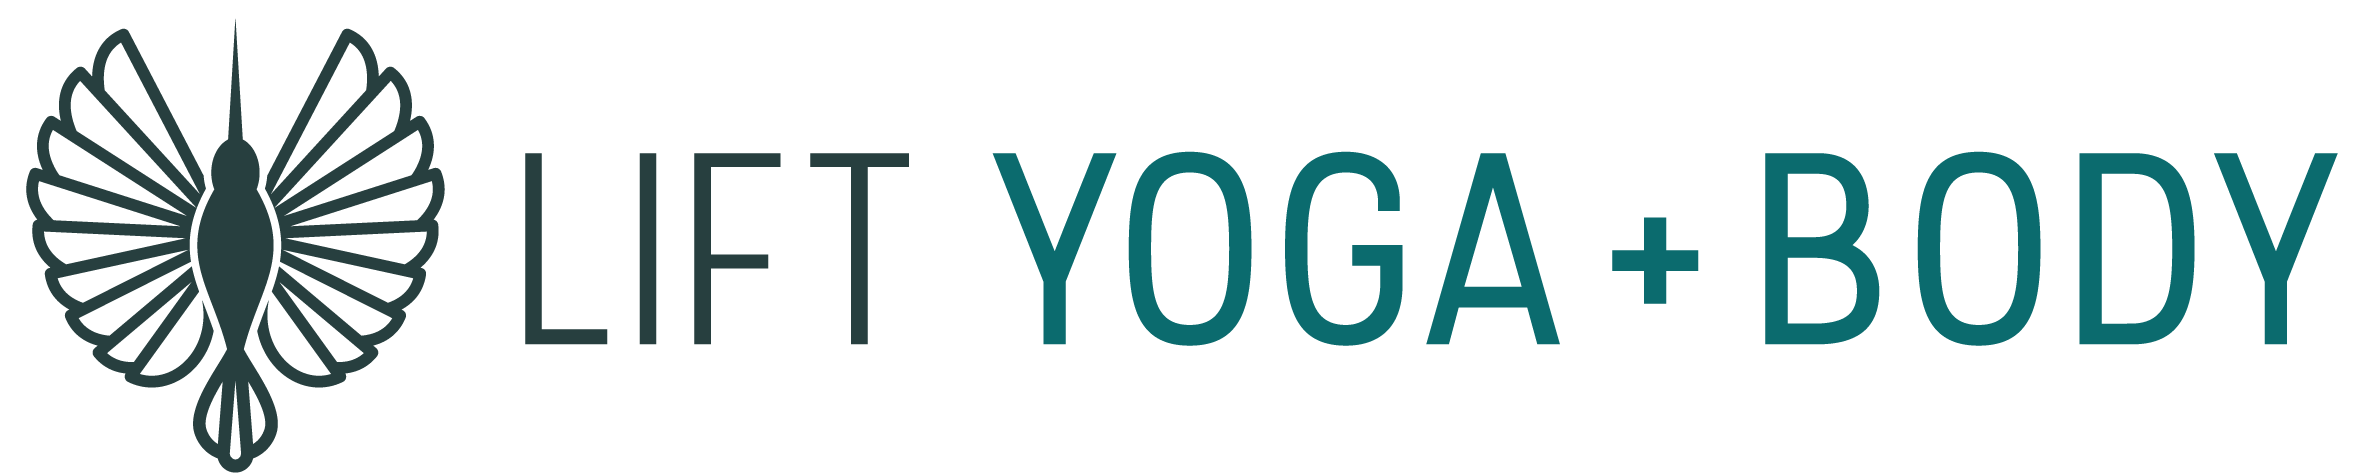 Lift-Yoga-Body-Studio-Main-Logo.png